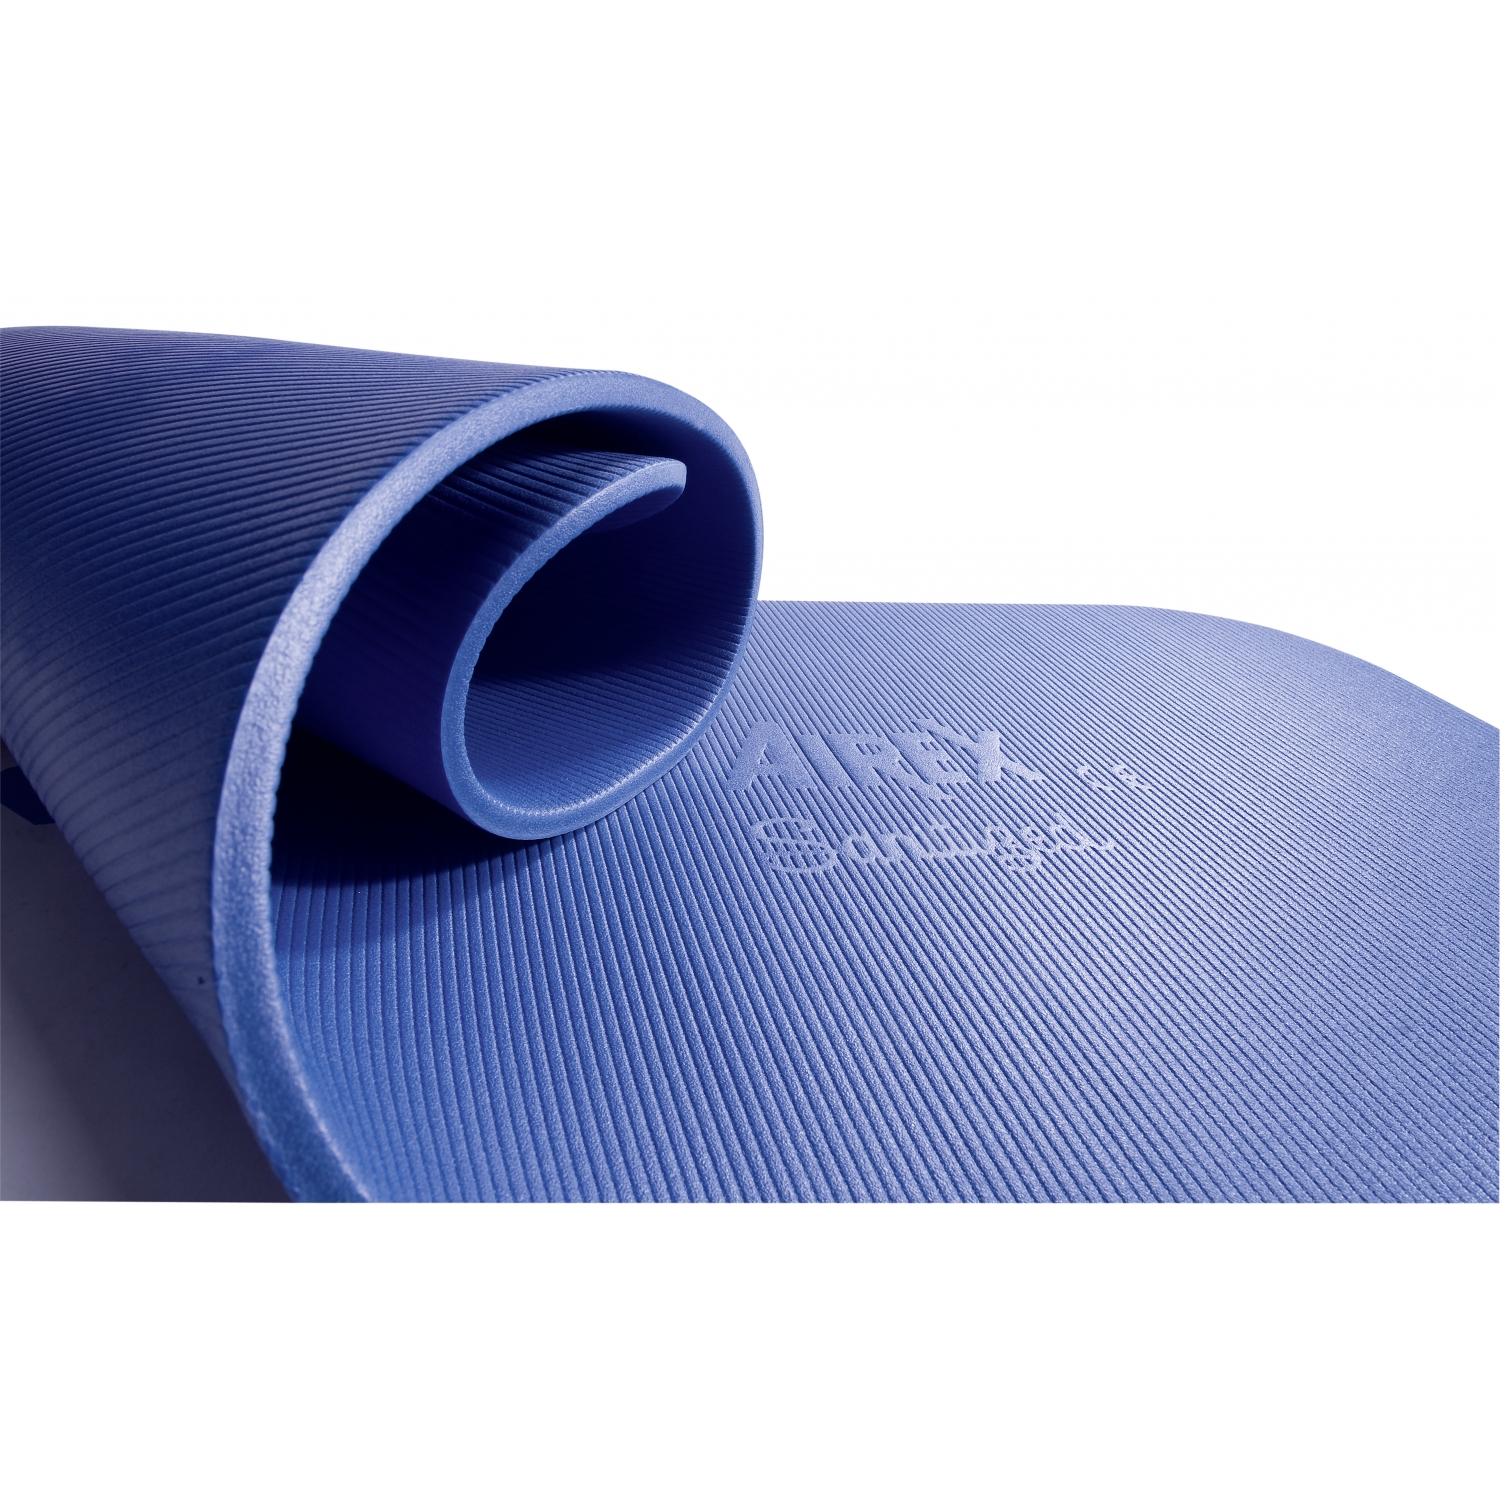 Airex tapis Corona - 185 x 100 x 1,5 cm - bleu